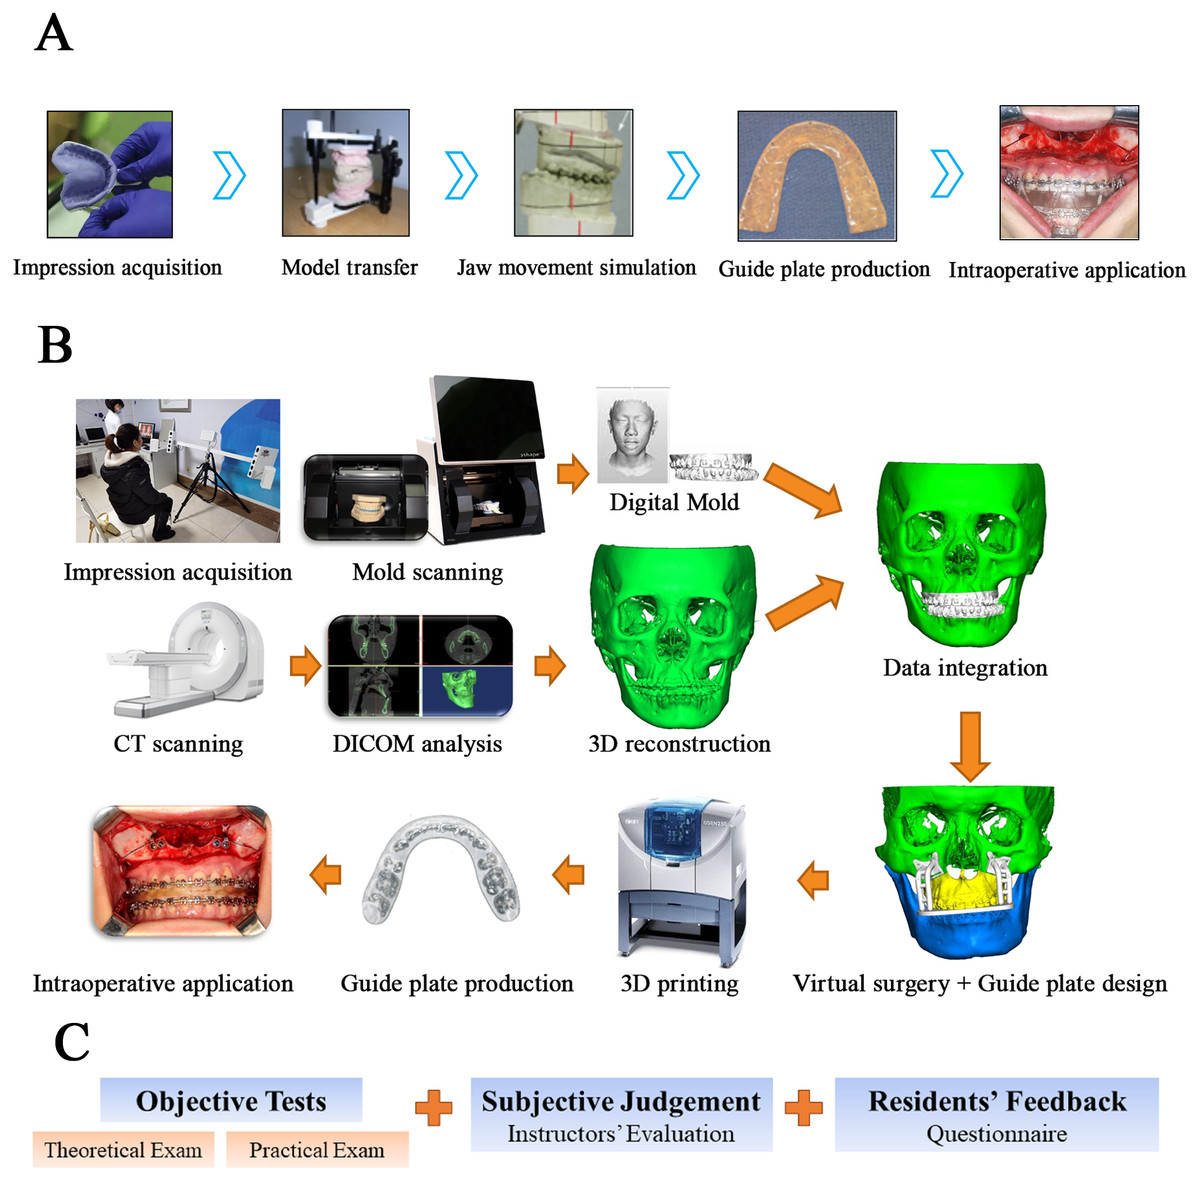 Digital technology for orthognathic surgery training promotion: a  randomized comparative study [PeerJ]